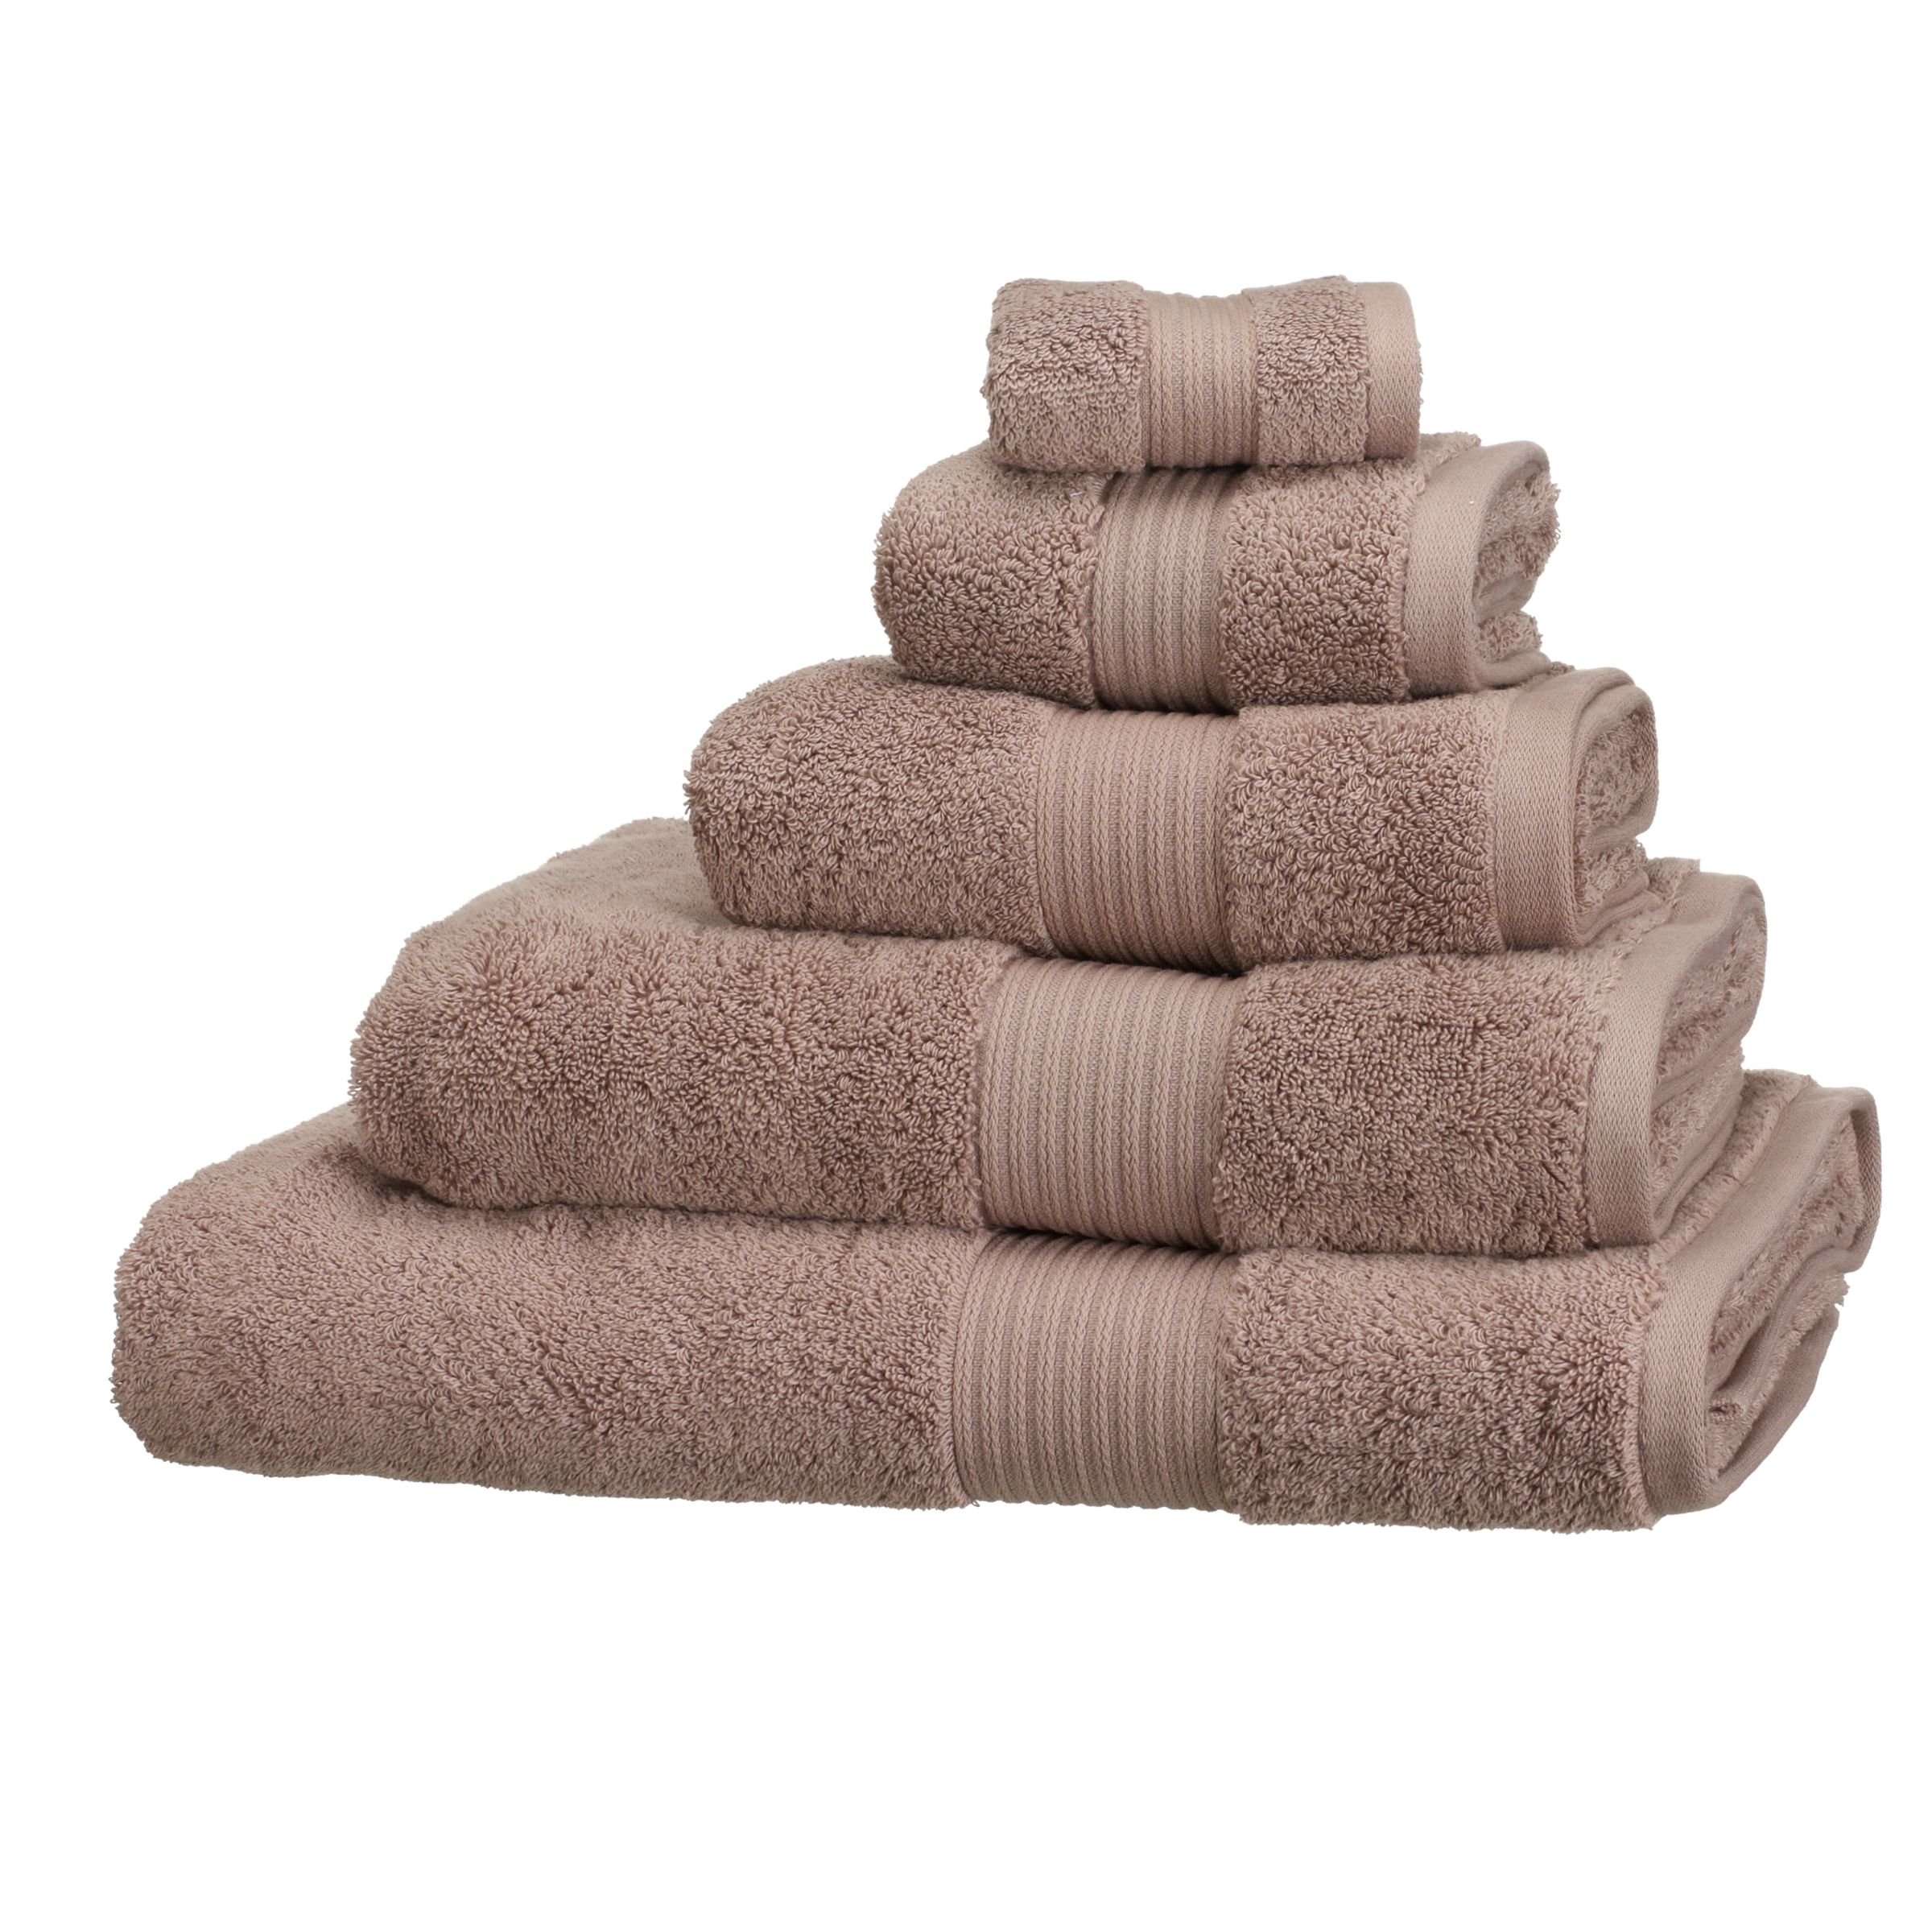 John Lewis Pure Cotton Towels, Truffle 109998